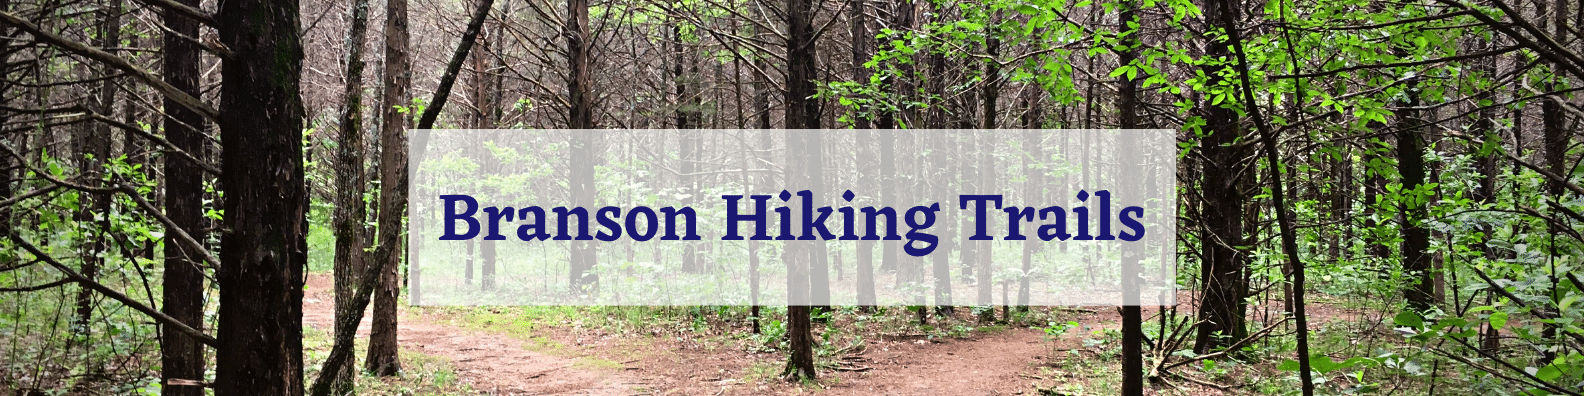 Branson Hiking Trails